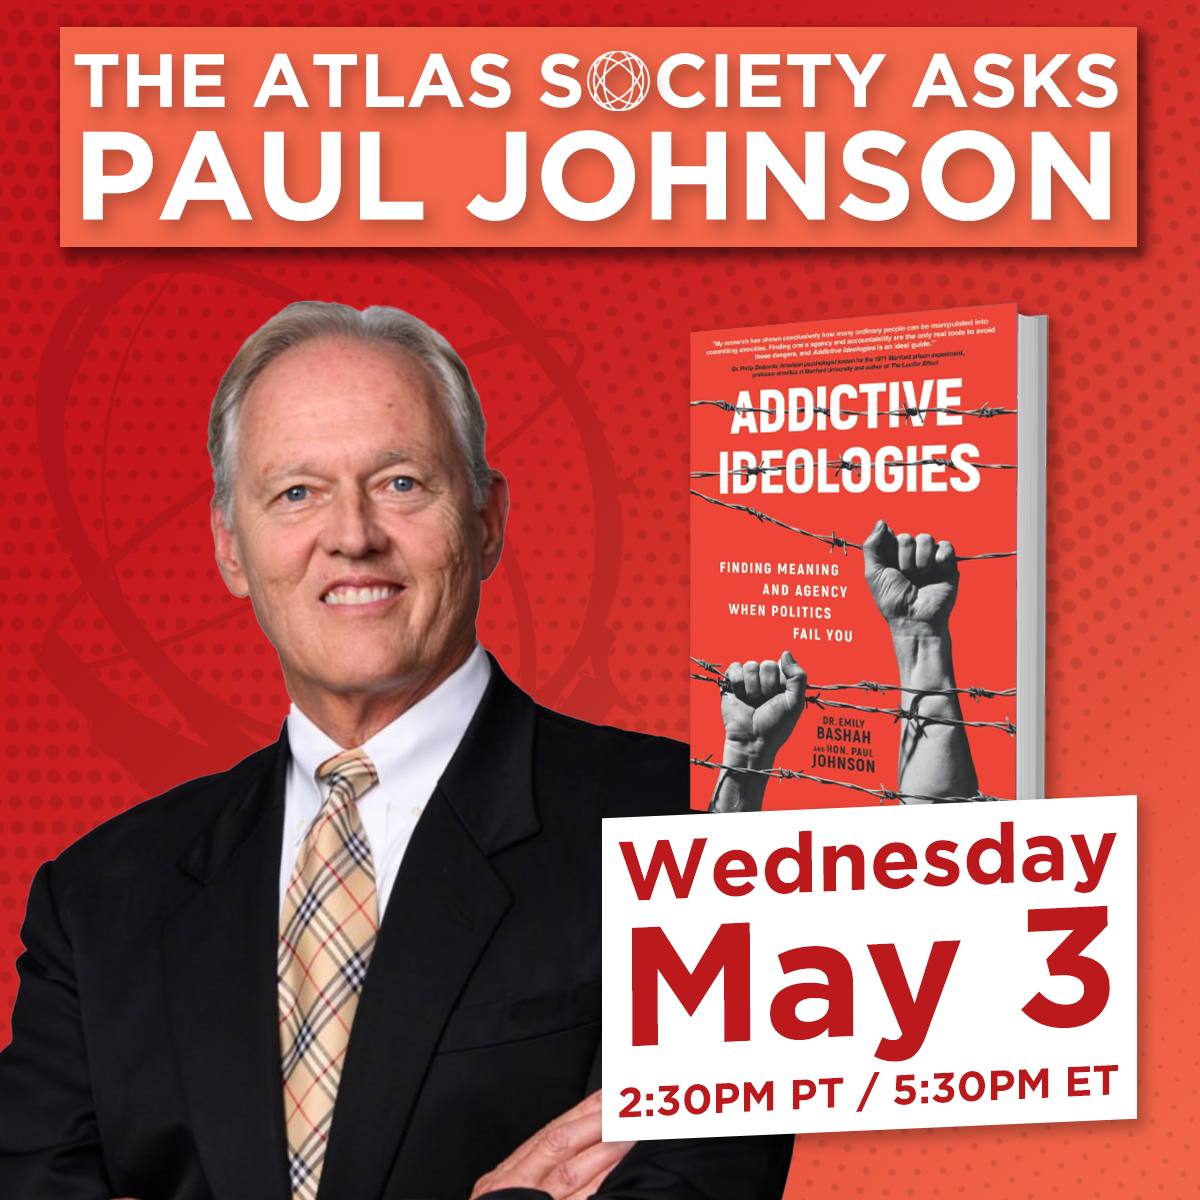 Being An Optimistic American: The Atlas Society Asks Paul Johnson